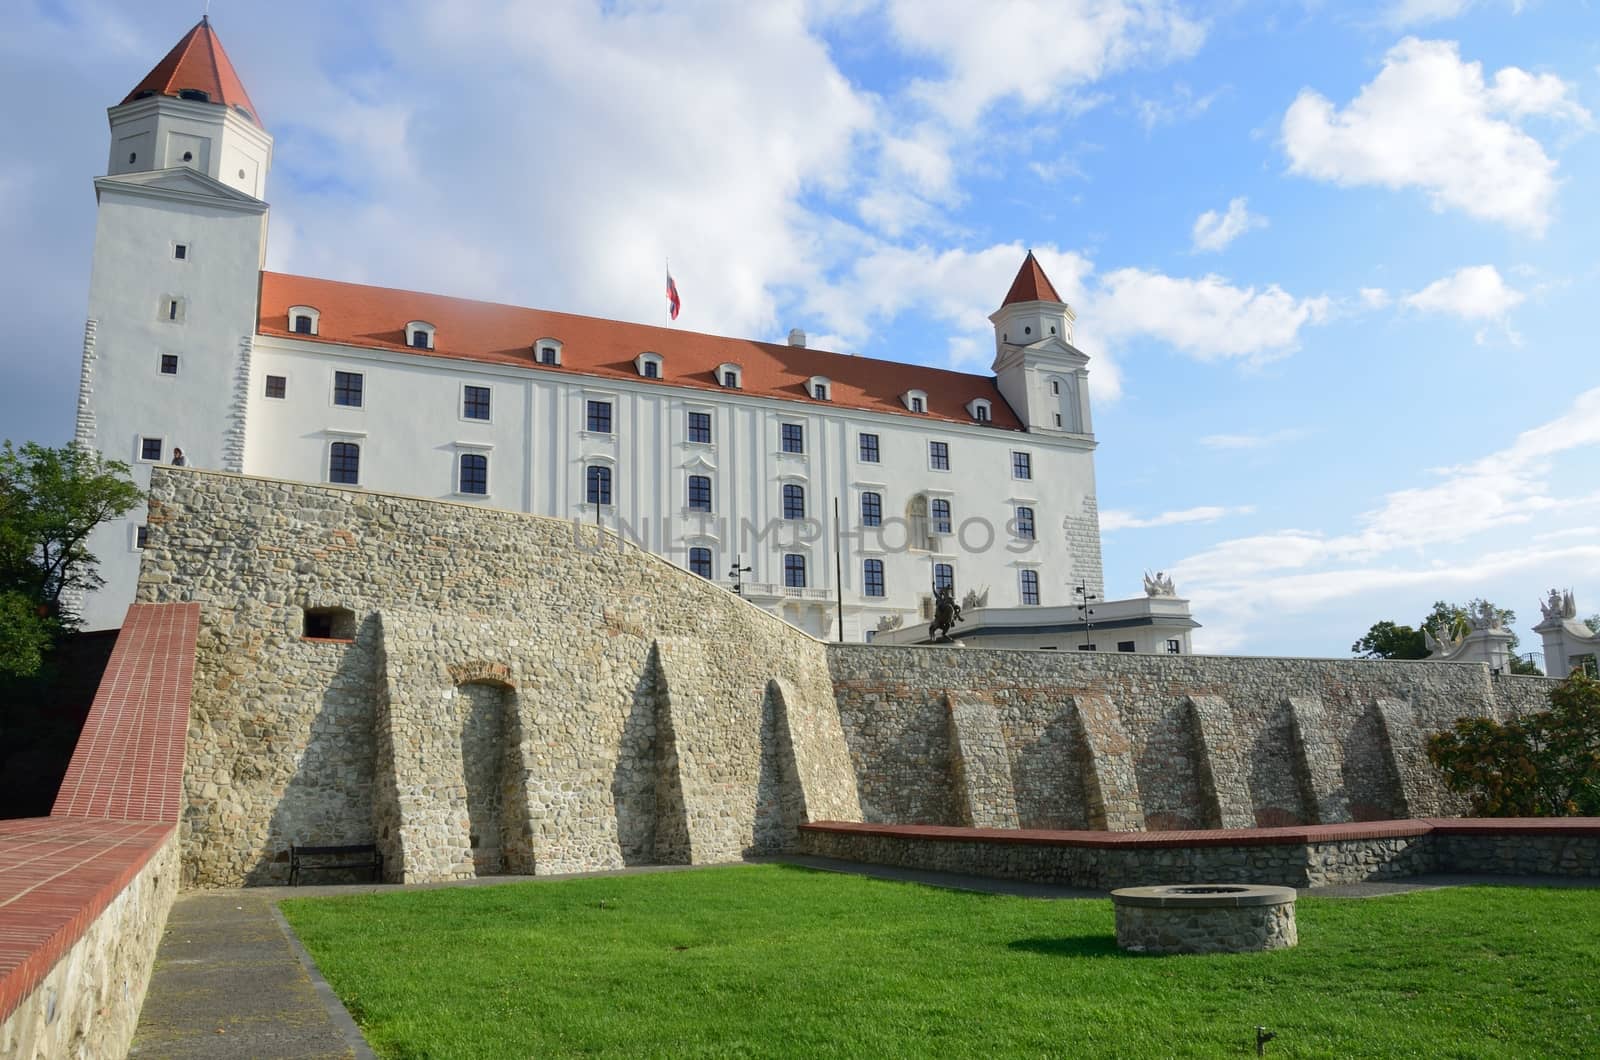 Bratislava Castle from bottom of Hill by pauws99